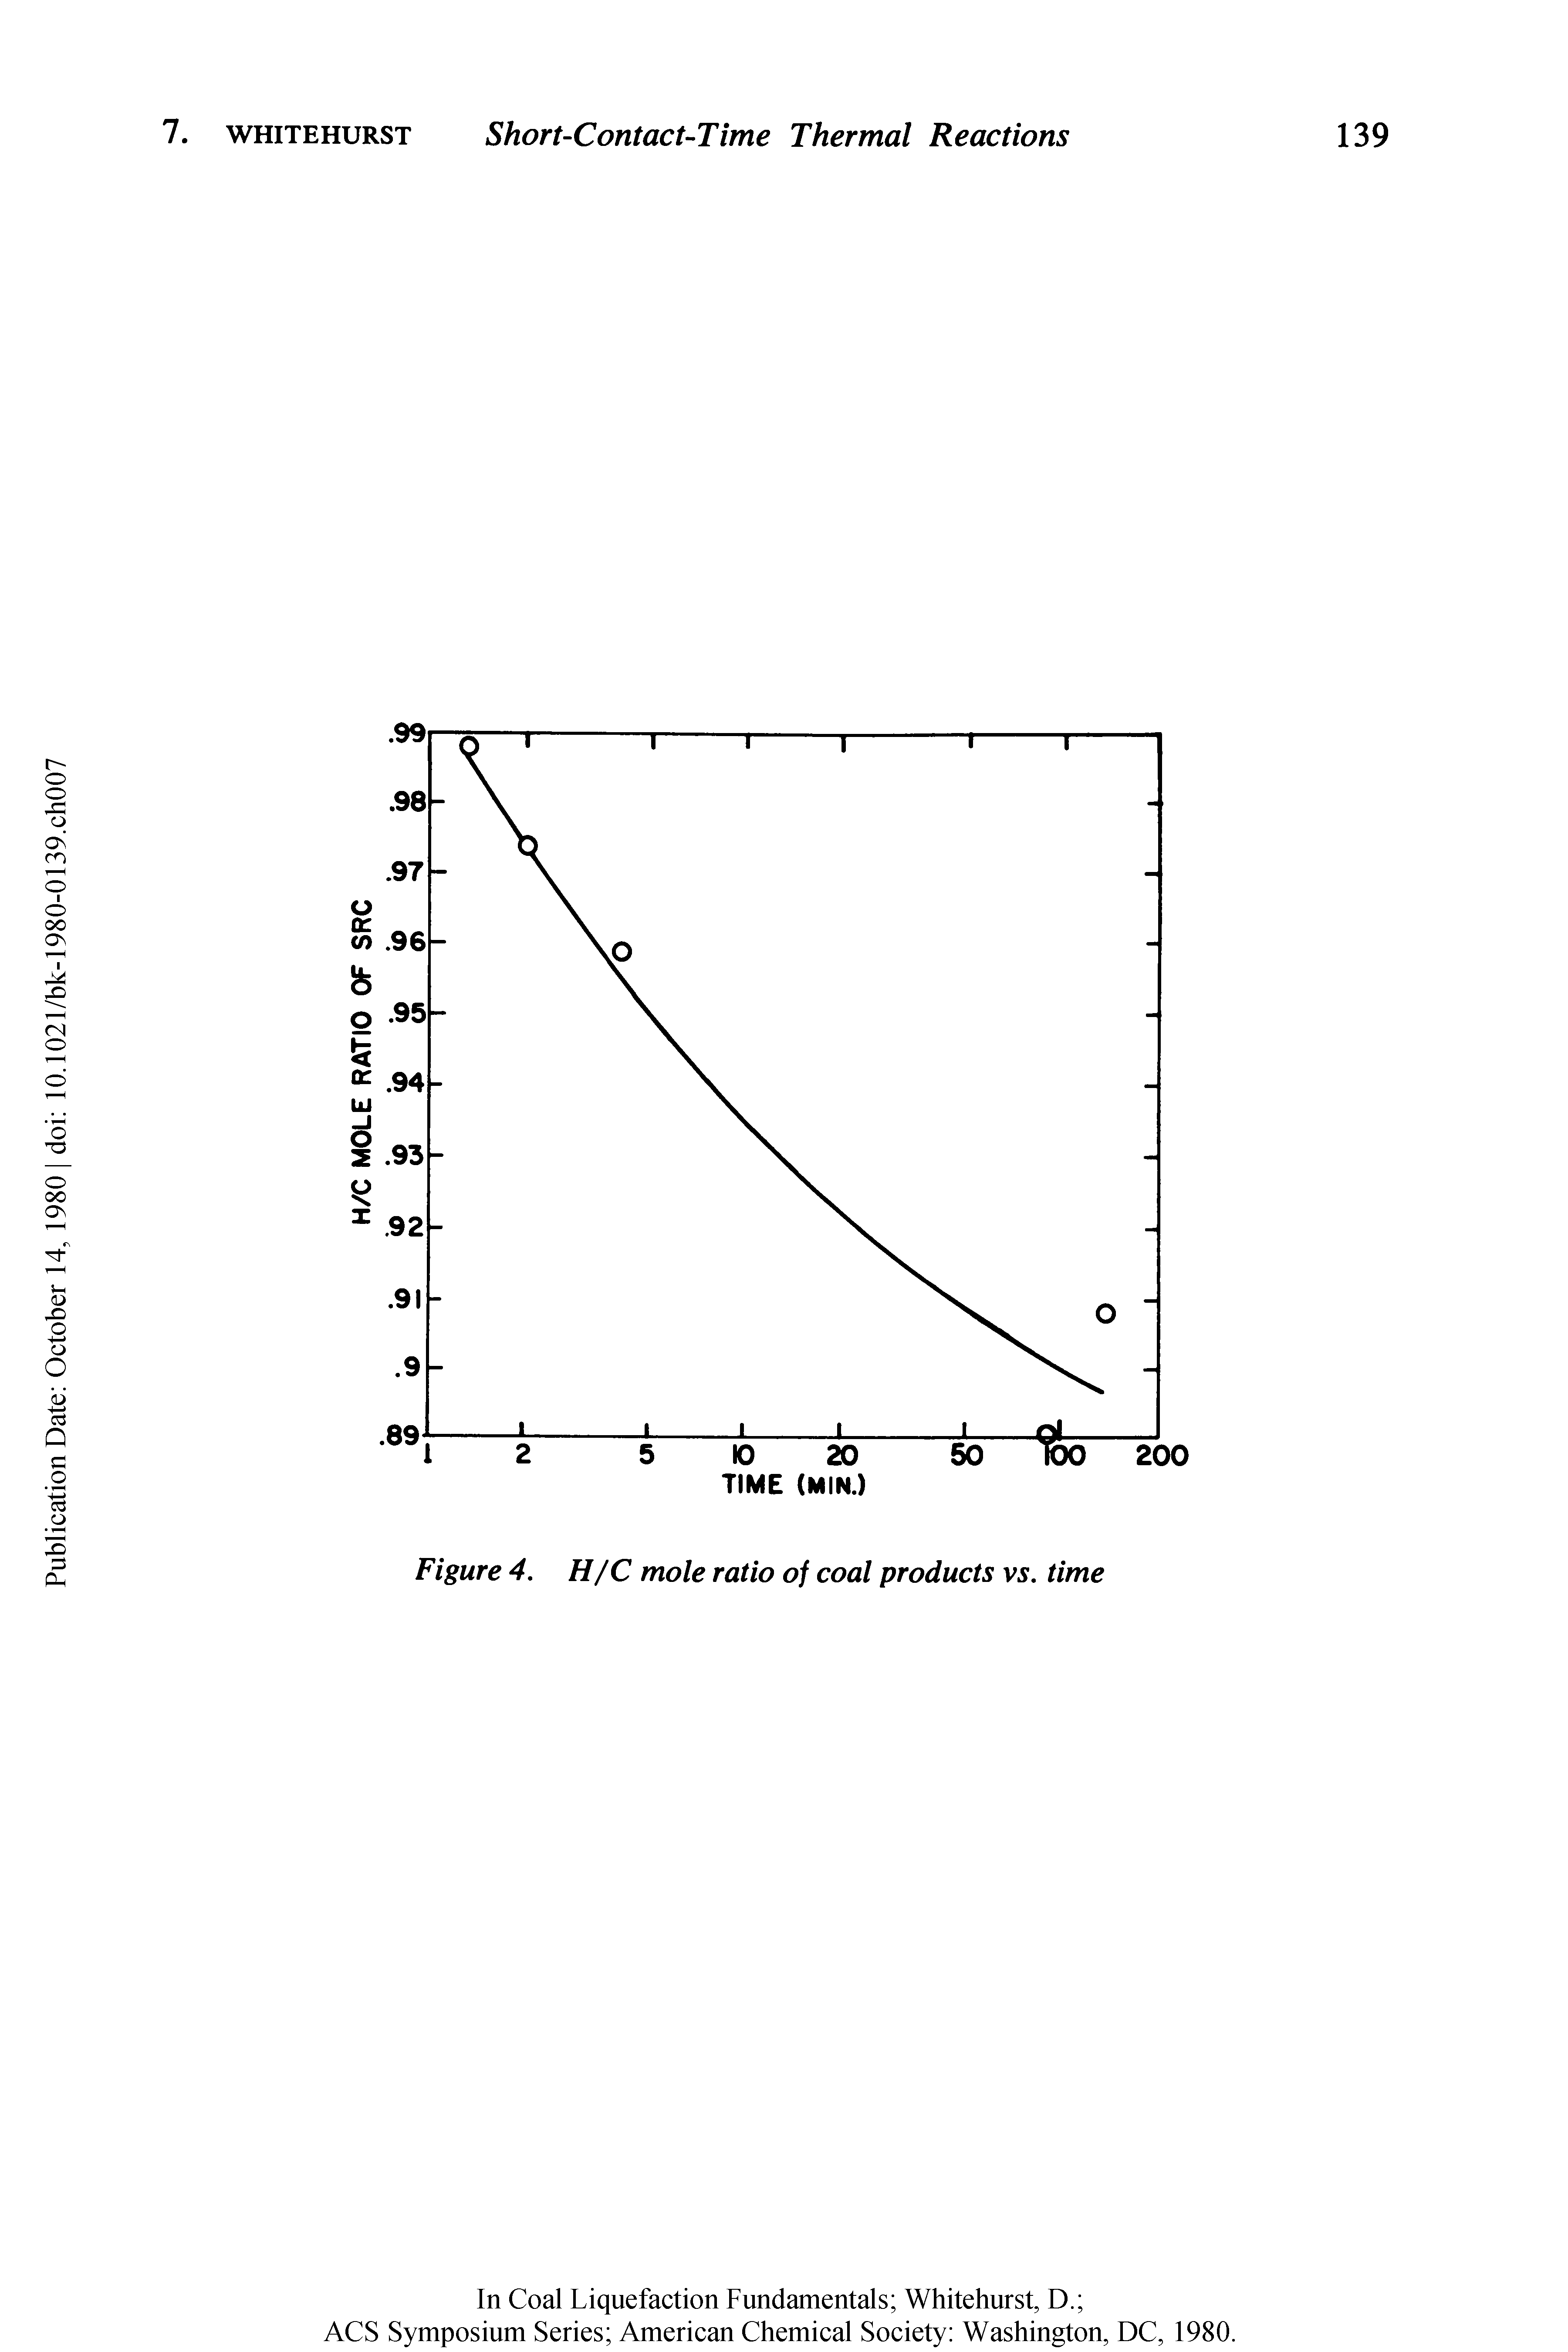 Figure 4. H/C mole ratio of coal products vs. time...